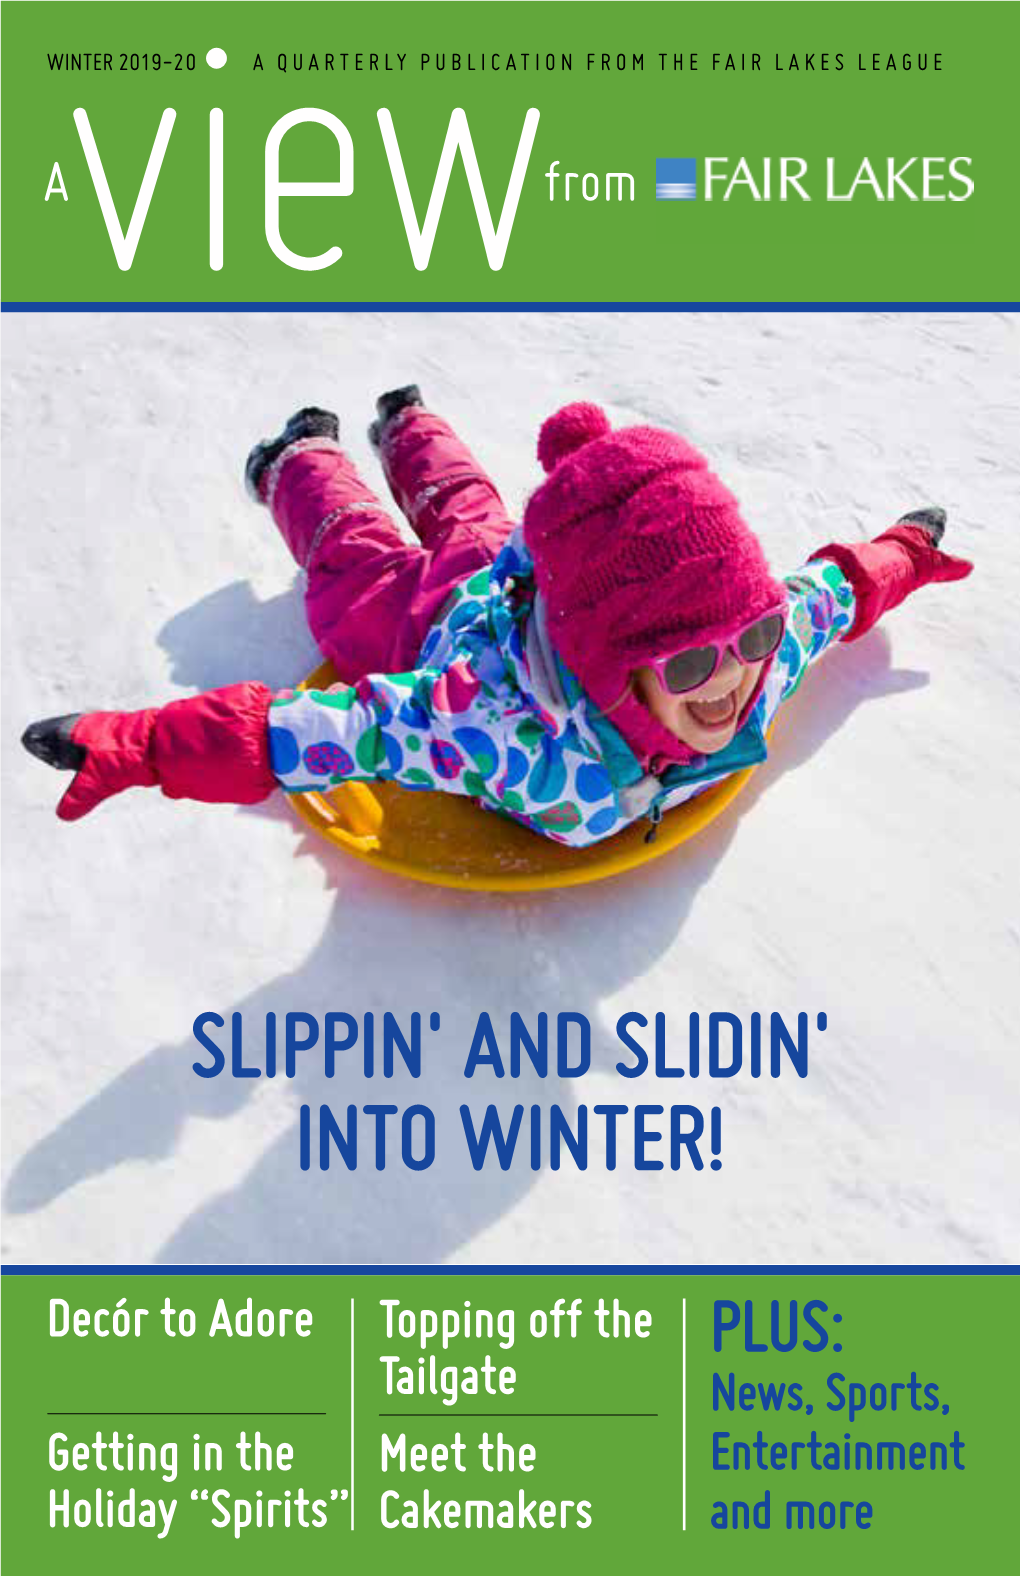 Slippin' and Slidin' Into Winter!